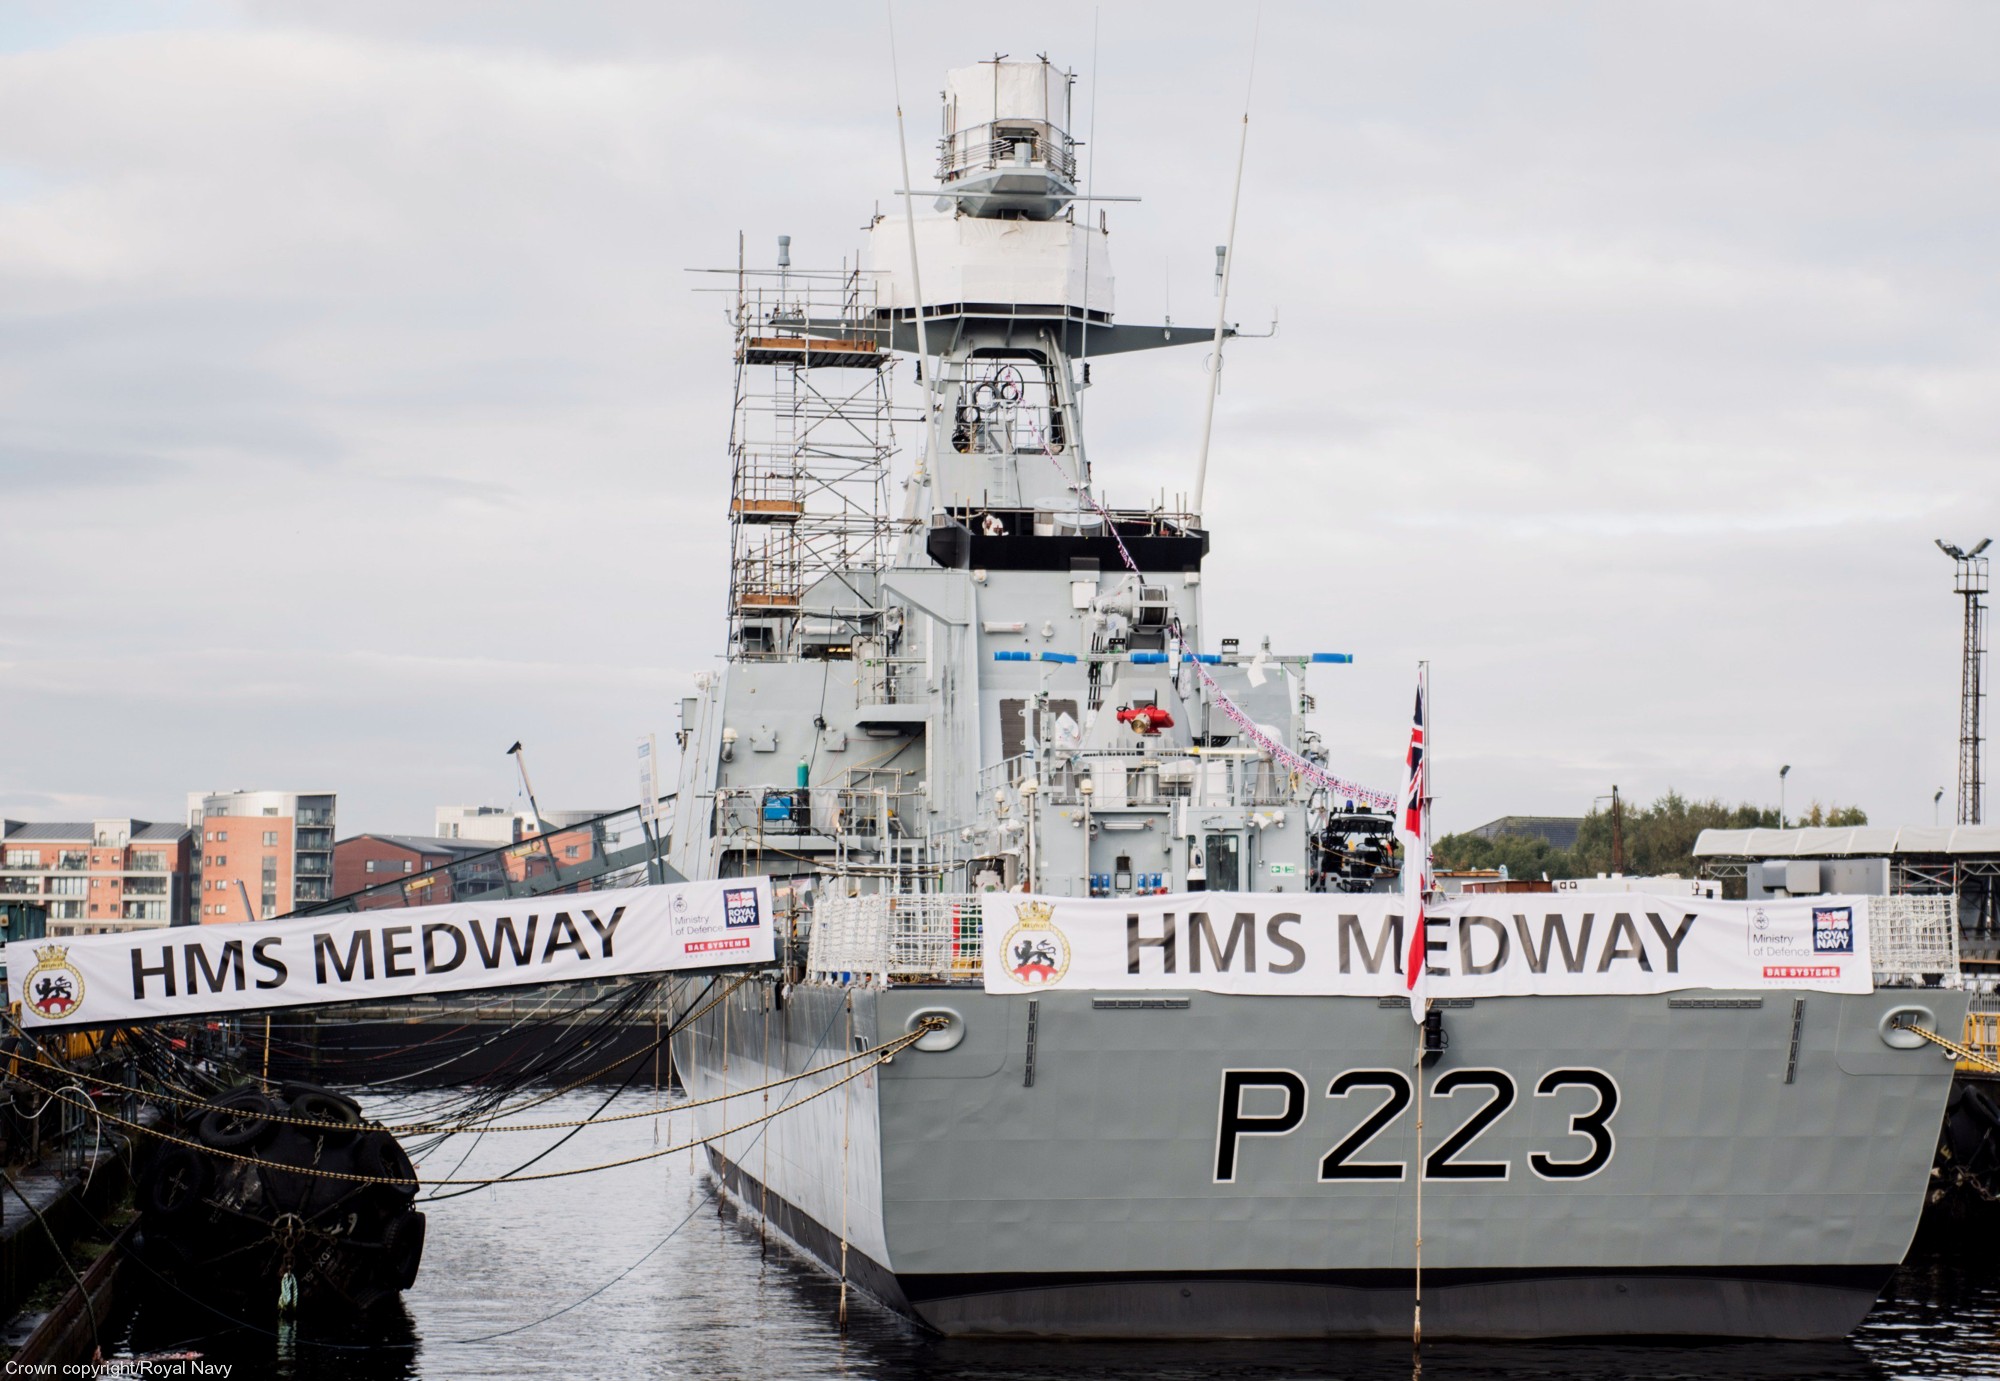 p-223 hms medway river class offshore patrol vessel opv royal navy 08